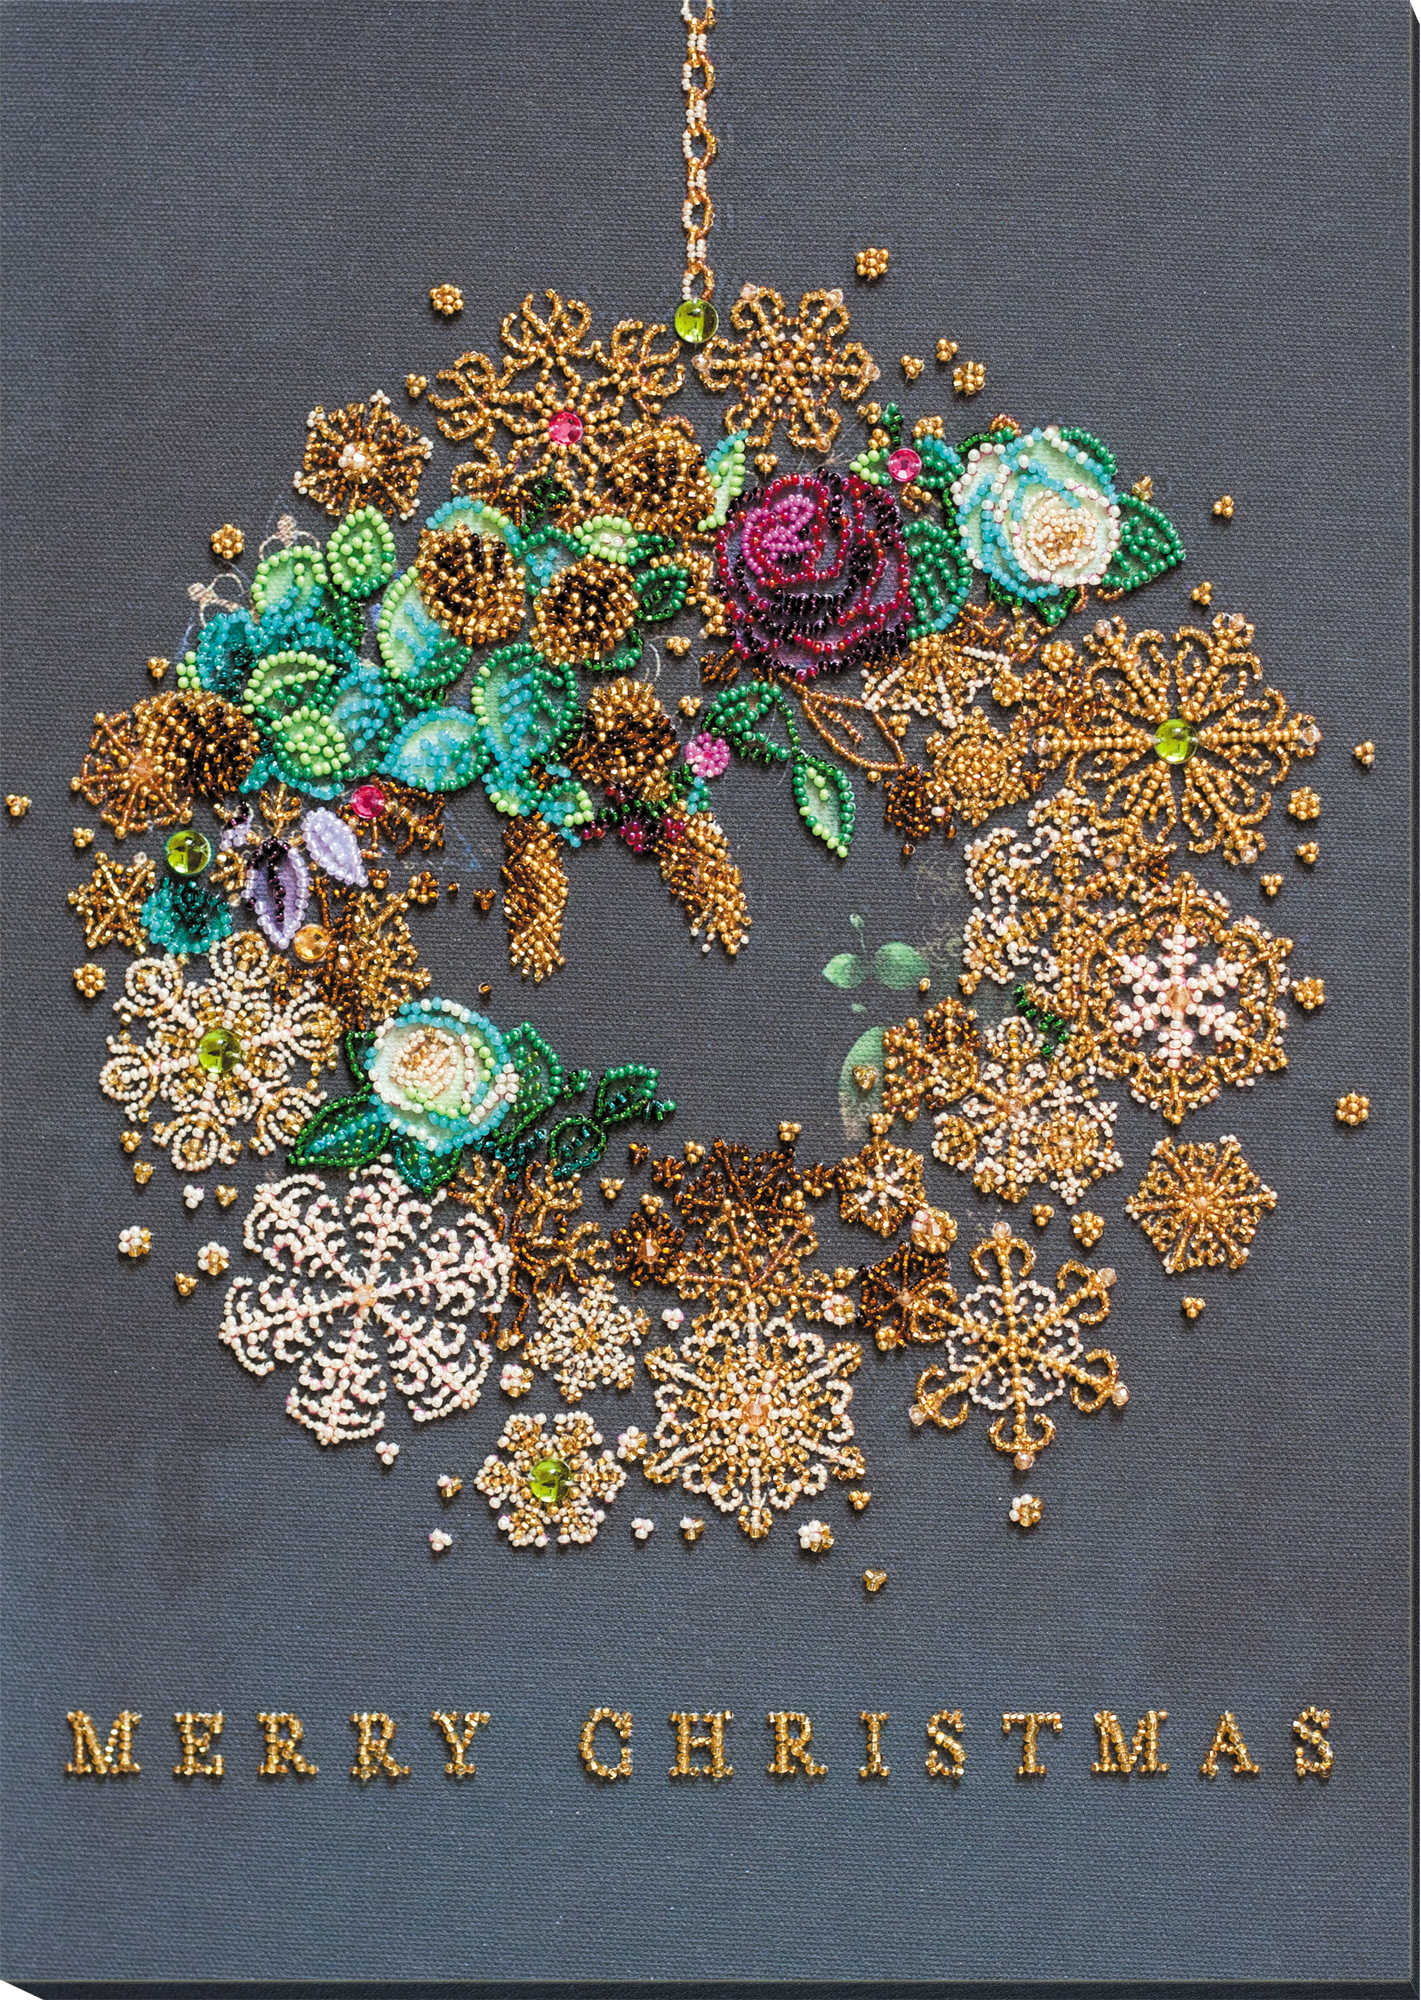 DIY Bead Embroidery Kit New year wreath 10.6x15.0 / 27.0x38.0